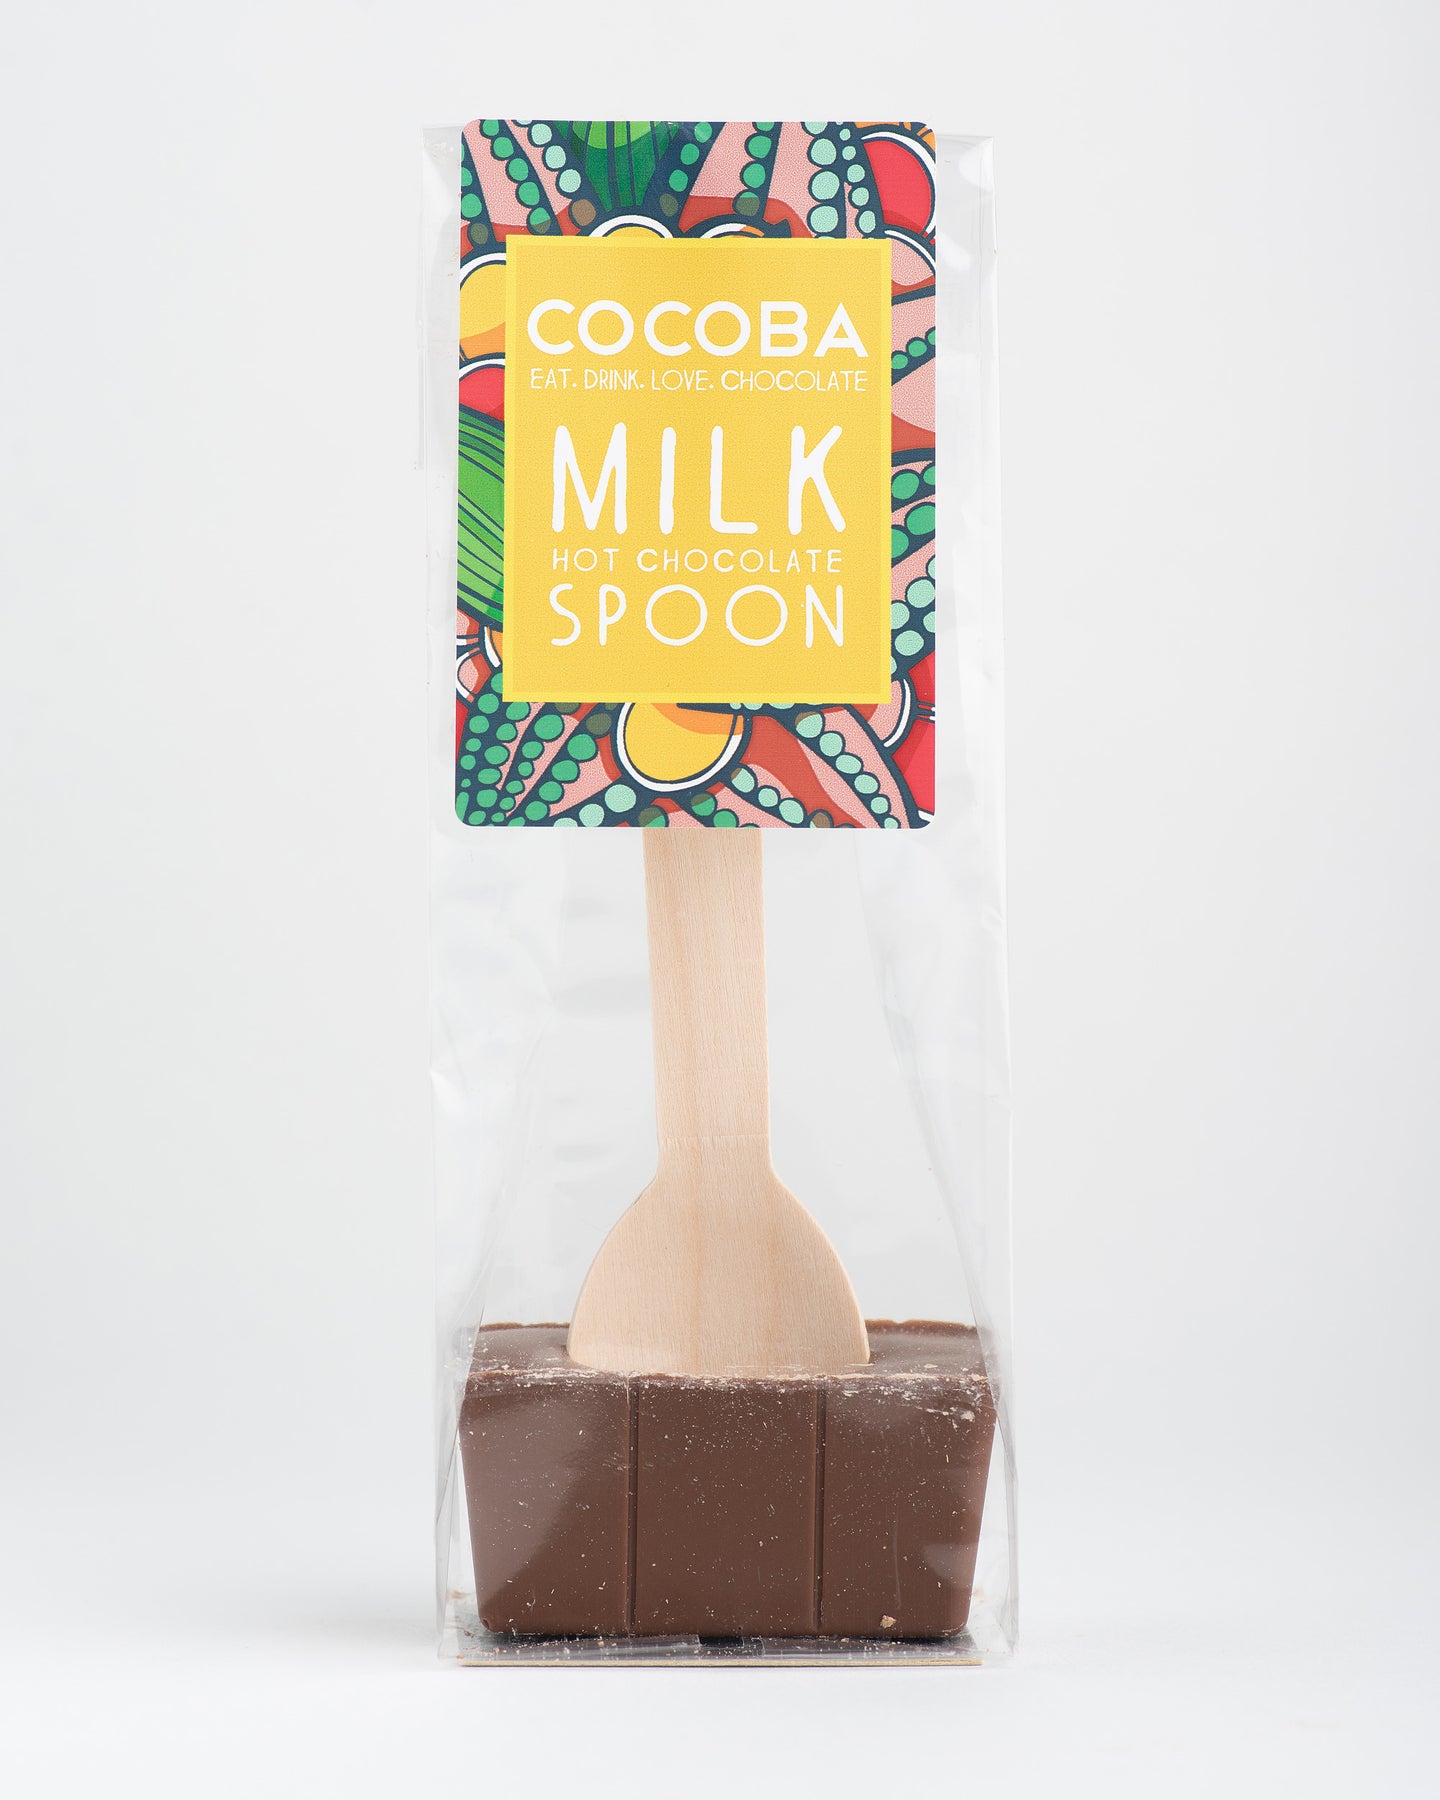 Cocoba -  Milk Hot Chocolate Spoon